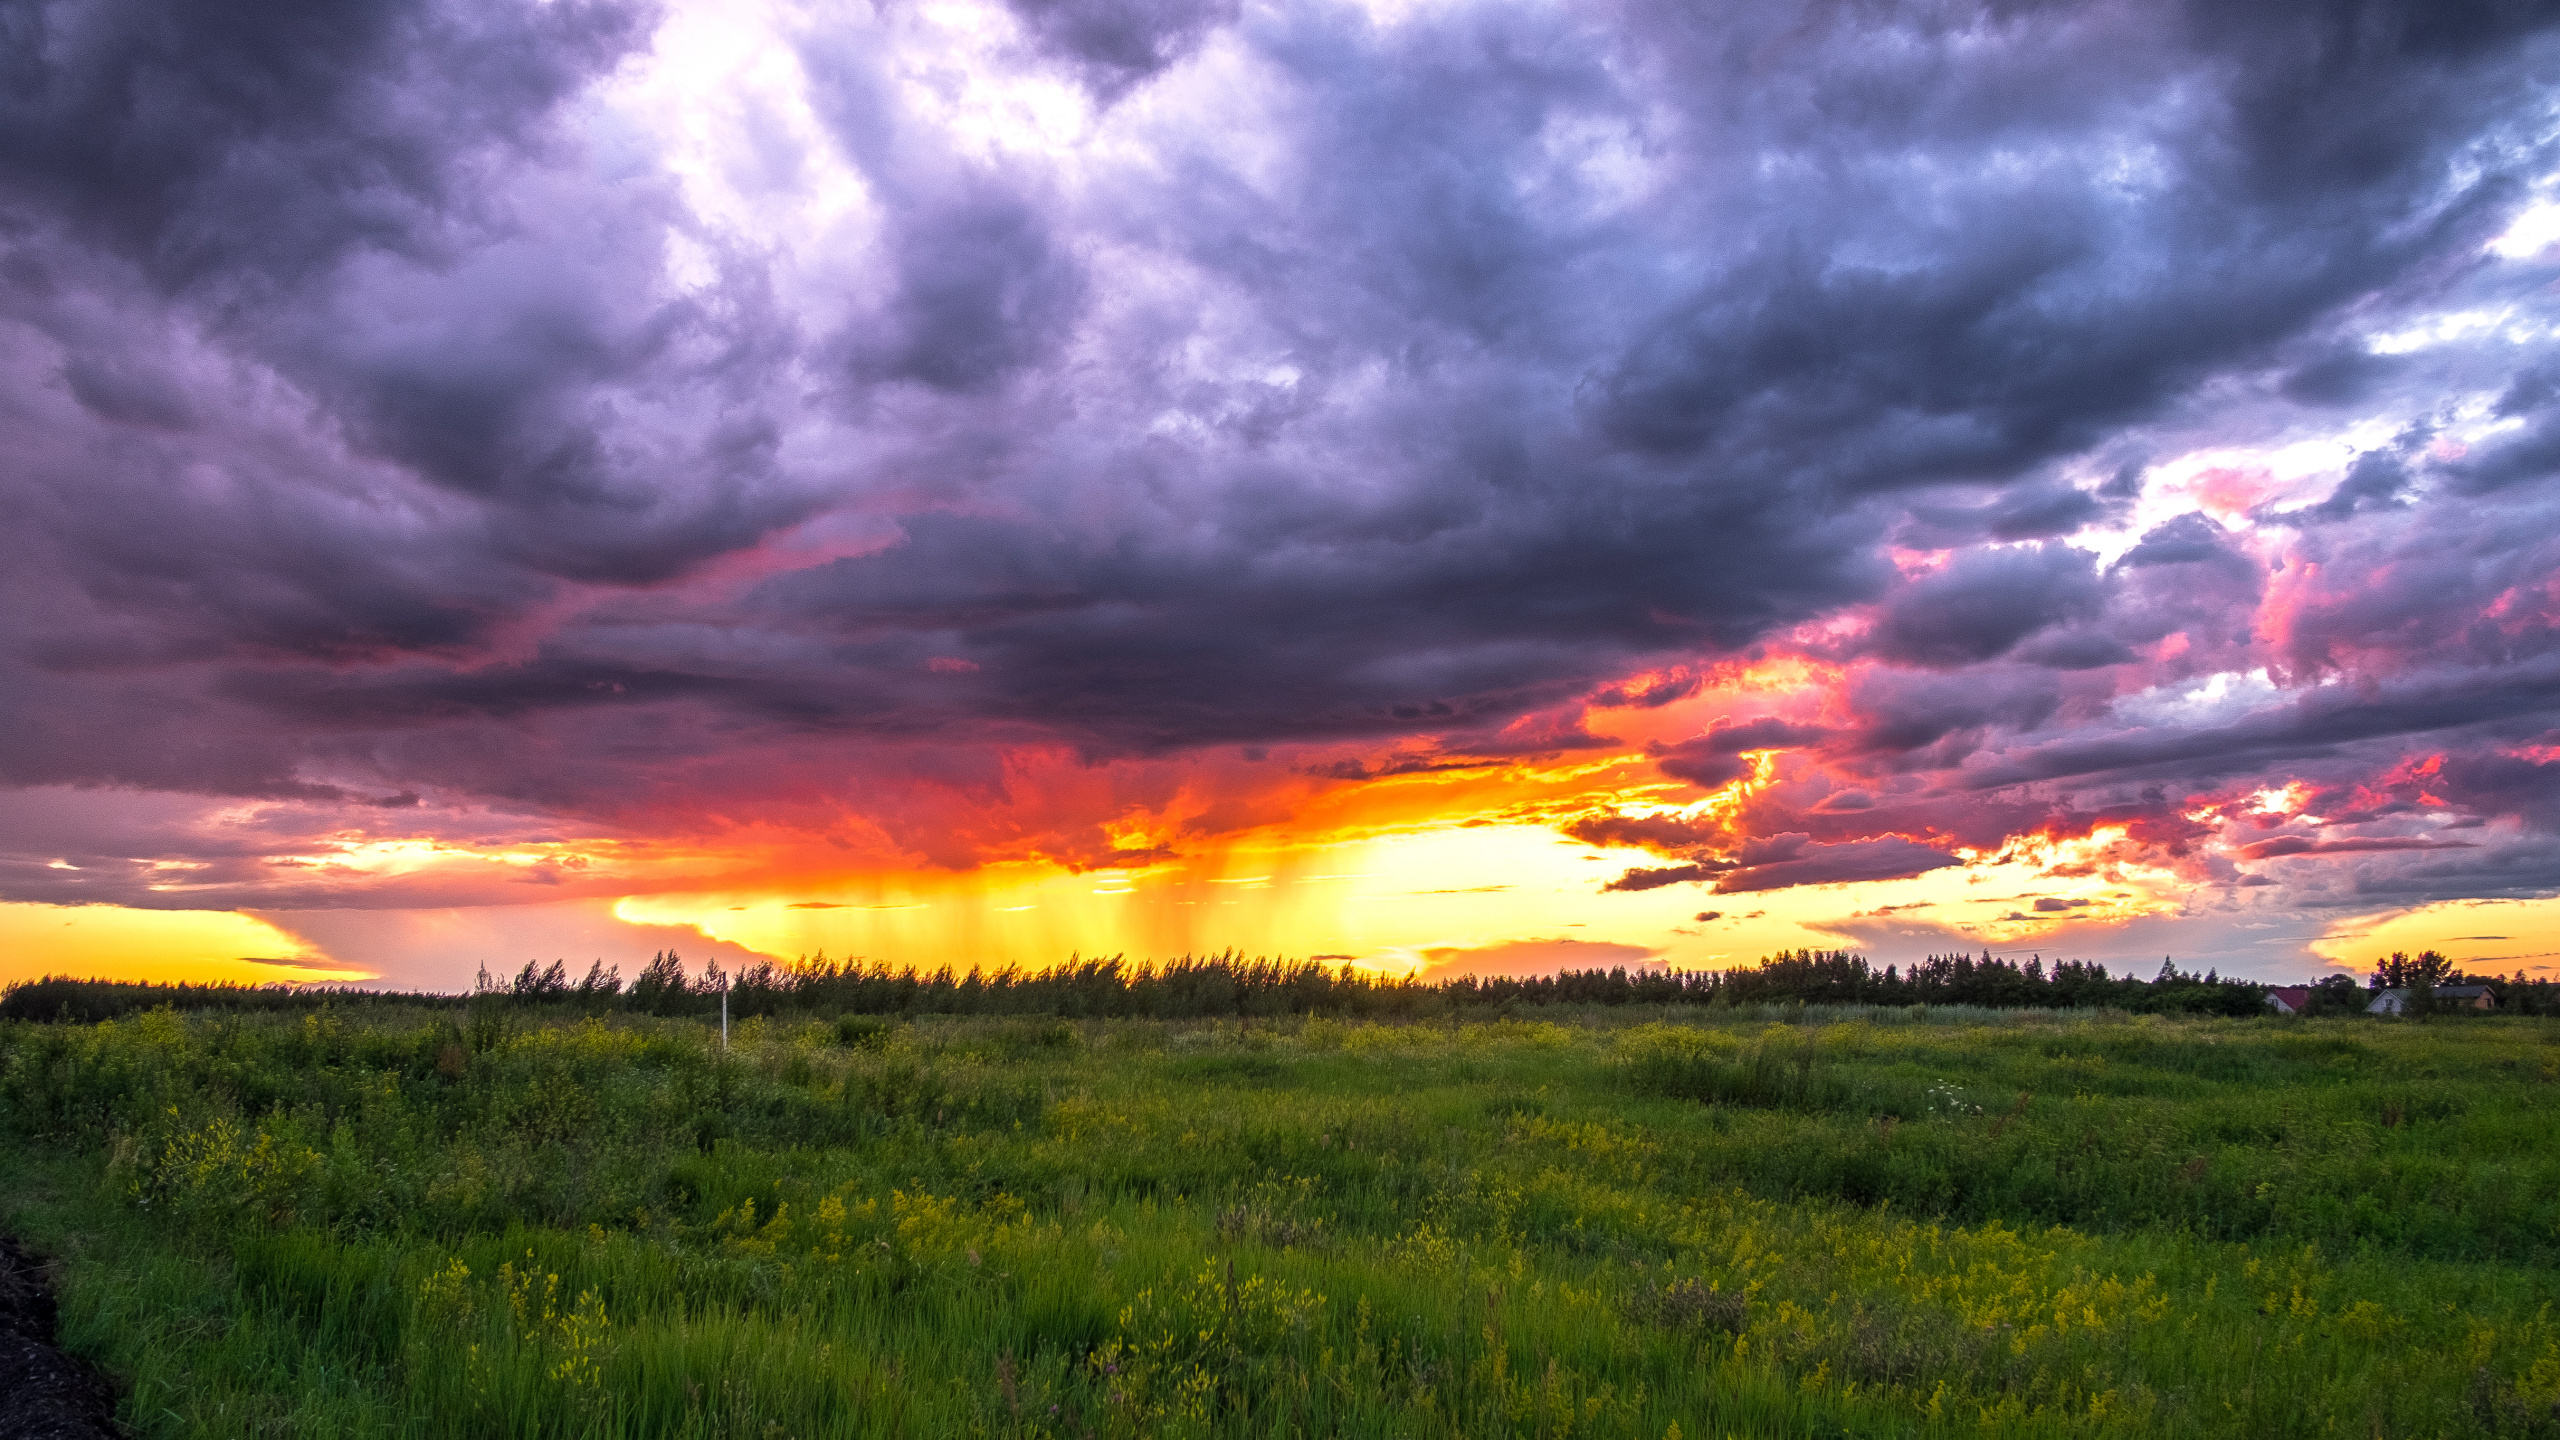 Green Grass Field Under Cloudy Sky During Sunset. Wallpaper in 2560x1440 Resolution